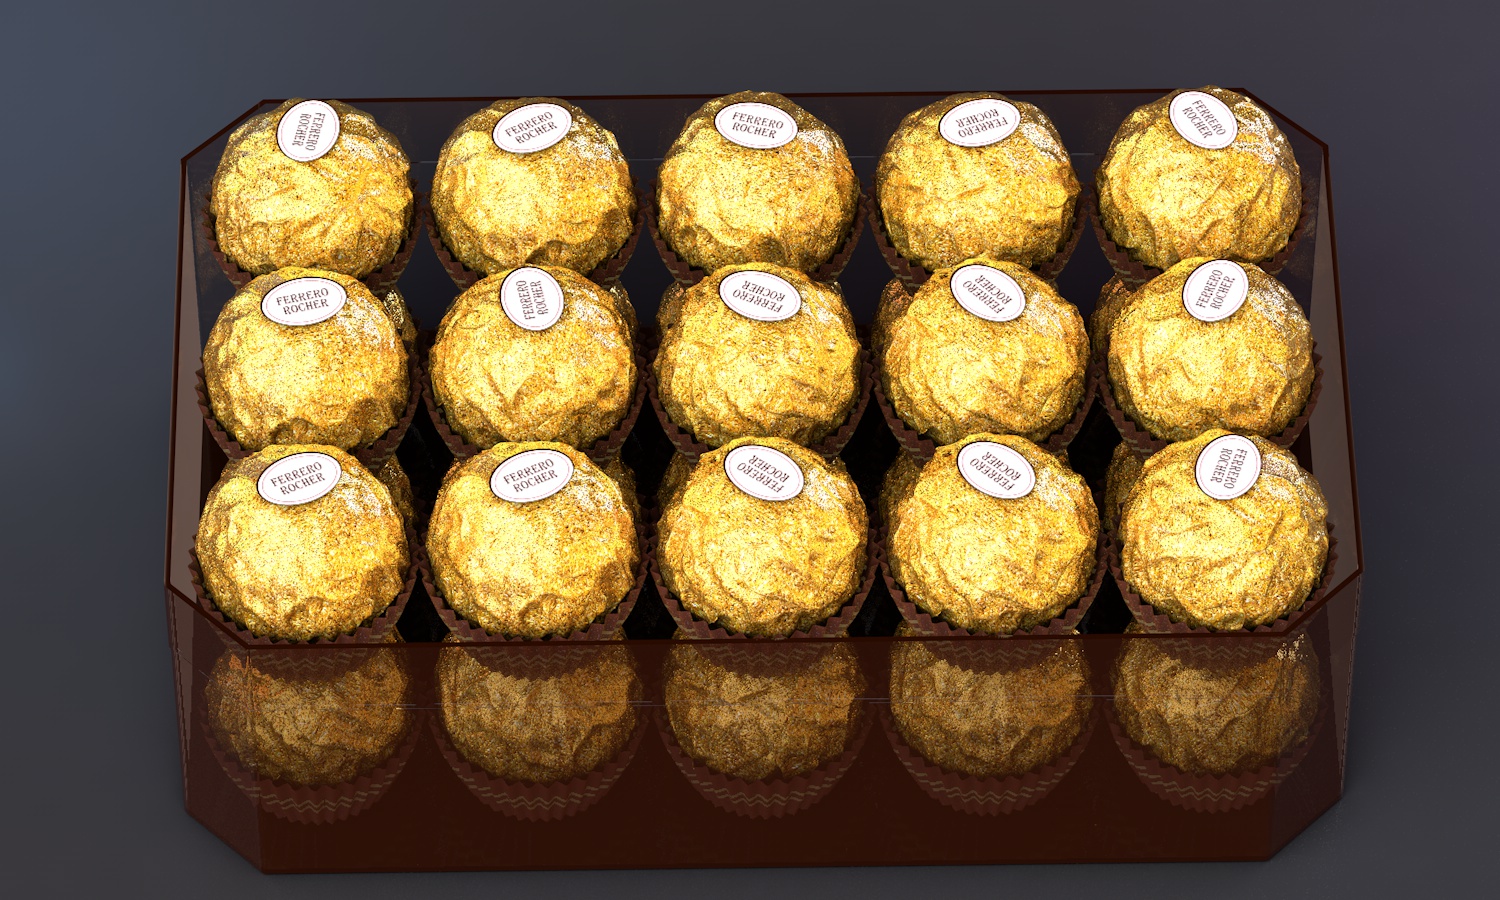 Ferrero Rocher Chocolates 3D model